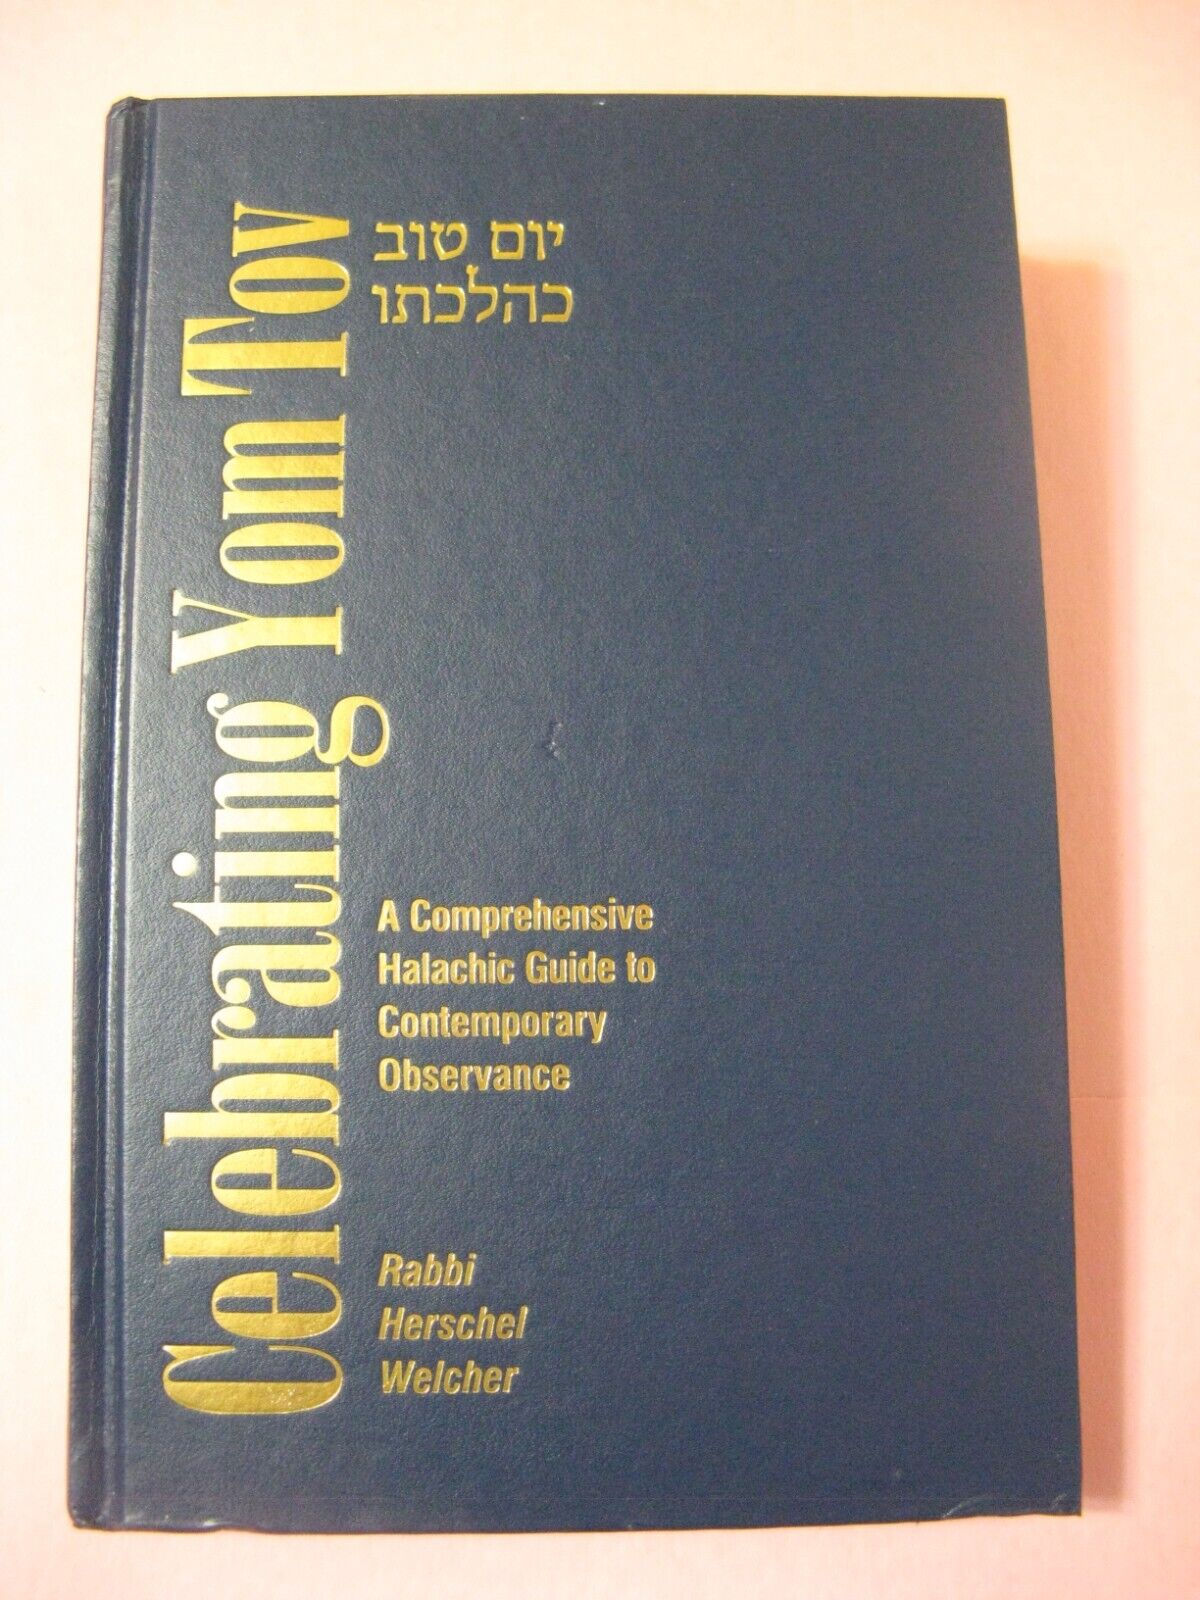 Celebrating Yom Tov Rabbi Herschel Welcher Halachic Guide Contemporary Observanc